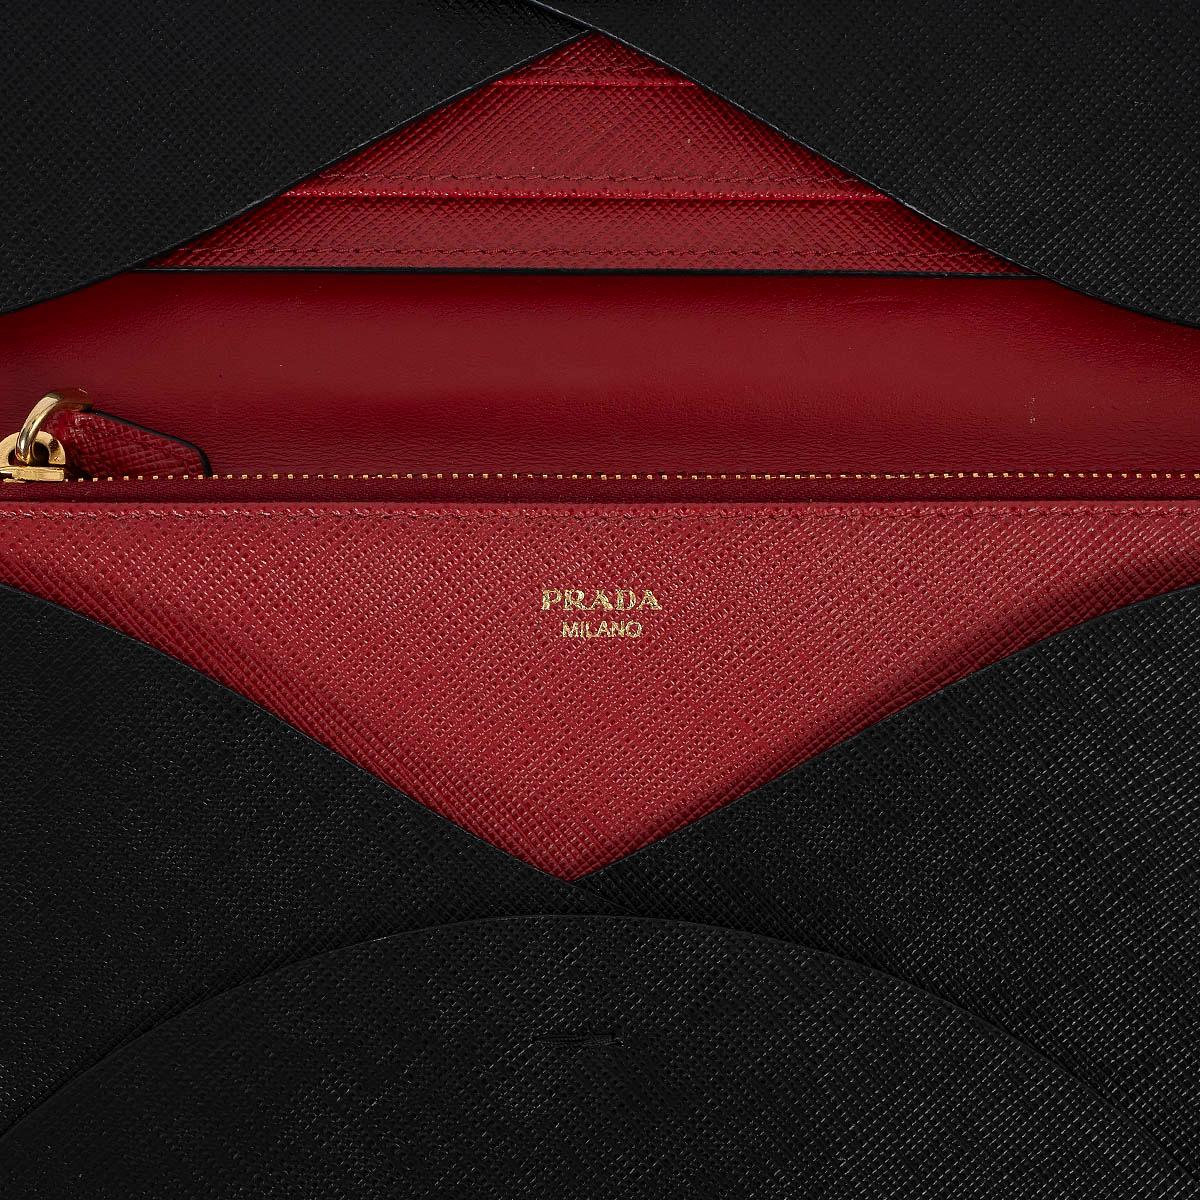 PRADA black / red Saffiano leather SMALL DOCUMENT PORTFOLIO Pouch Bag For Sale 4